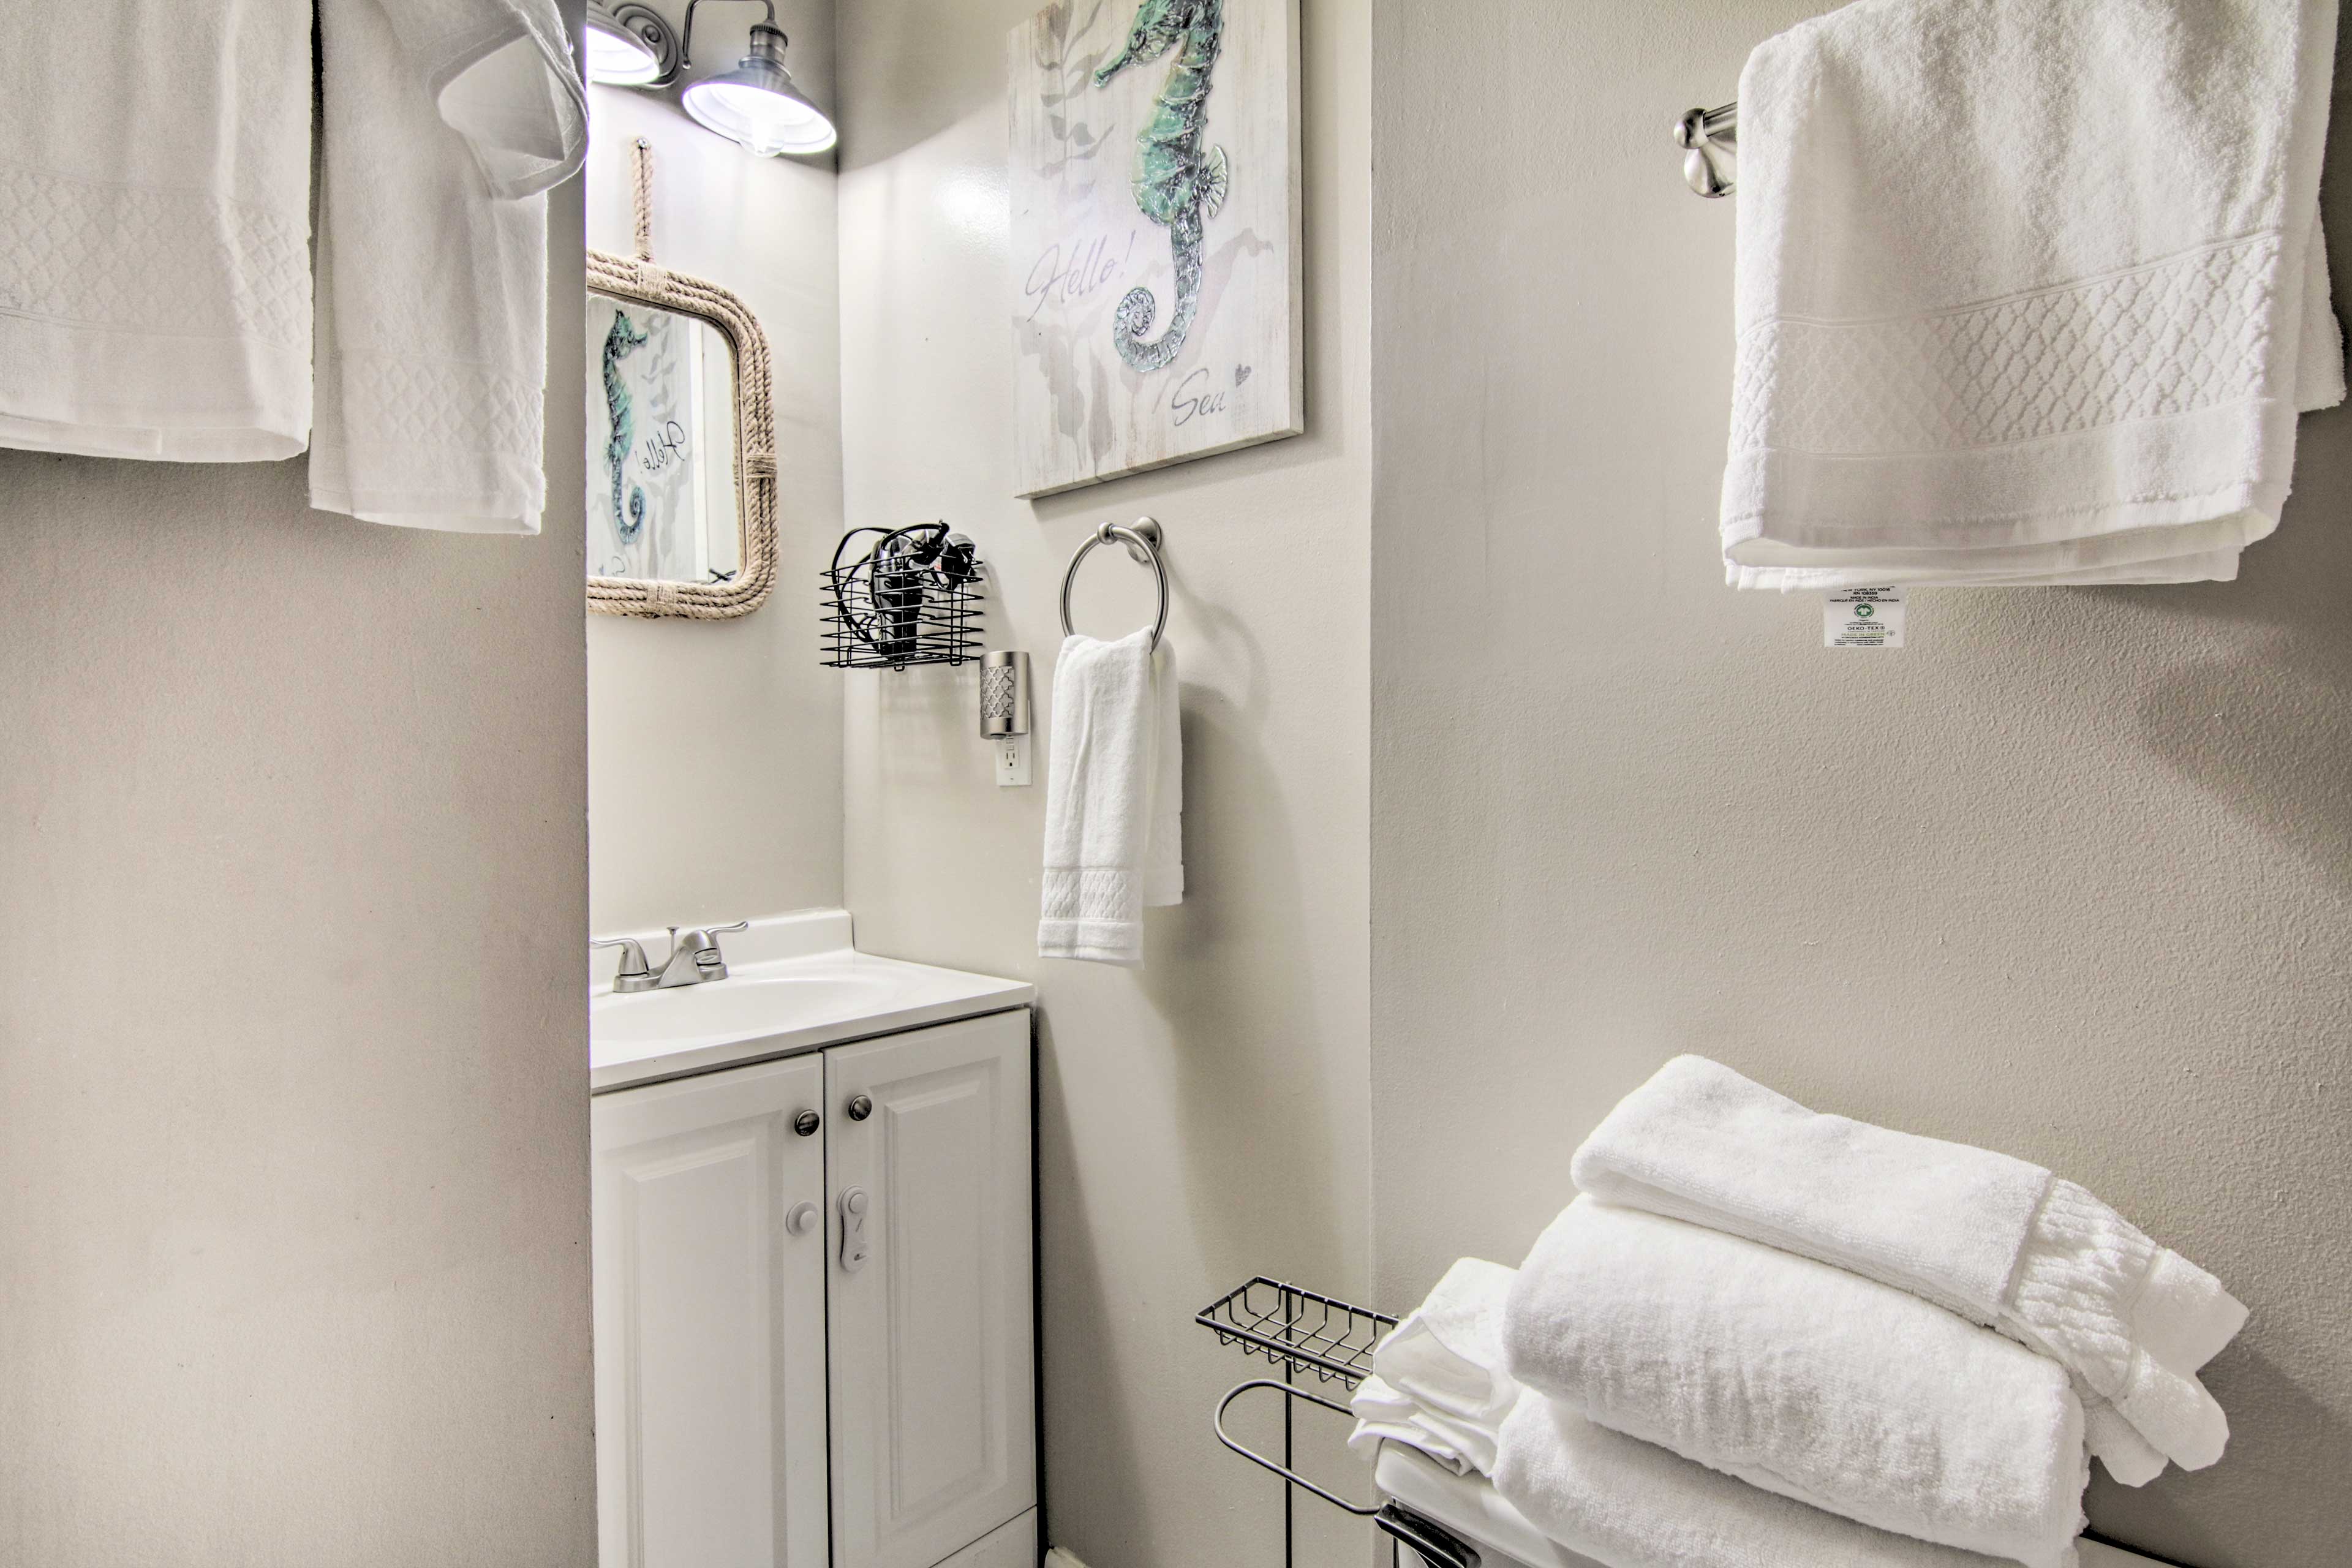 Bathroom | Towels Provided | Complimentary Toiletries | Hair Dryer